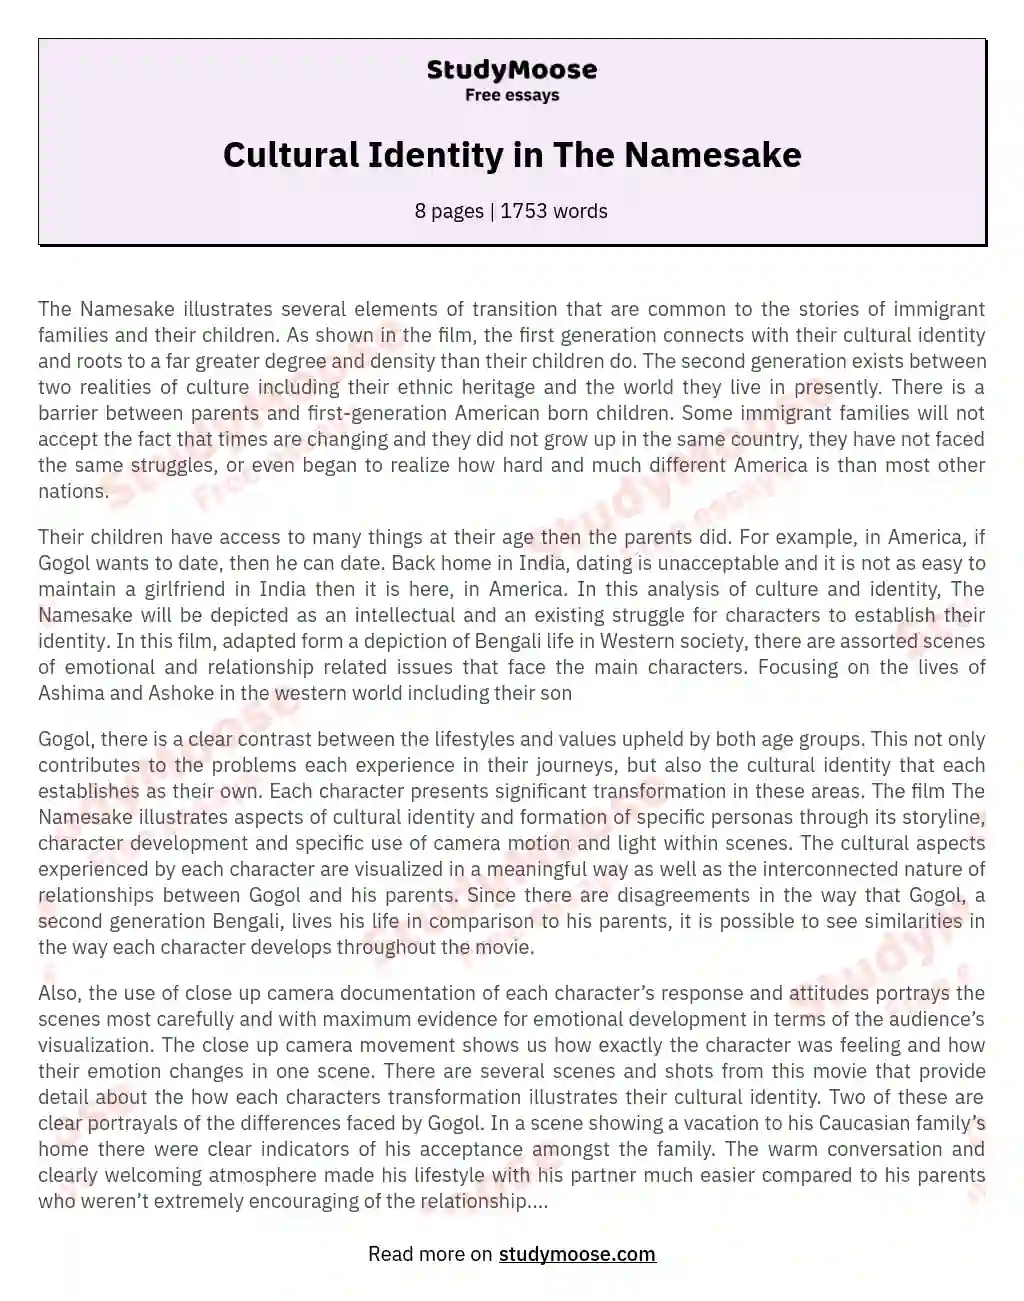 Cultural Identity in The Namesake essay